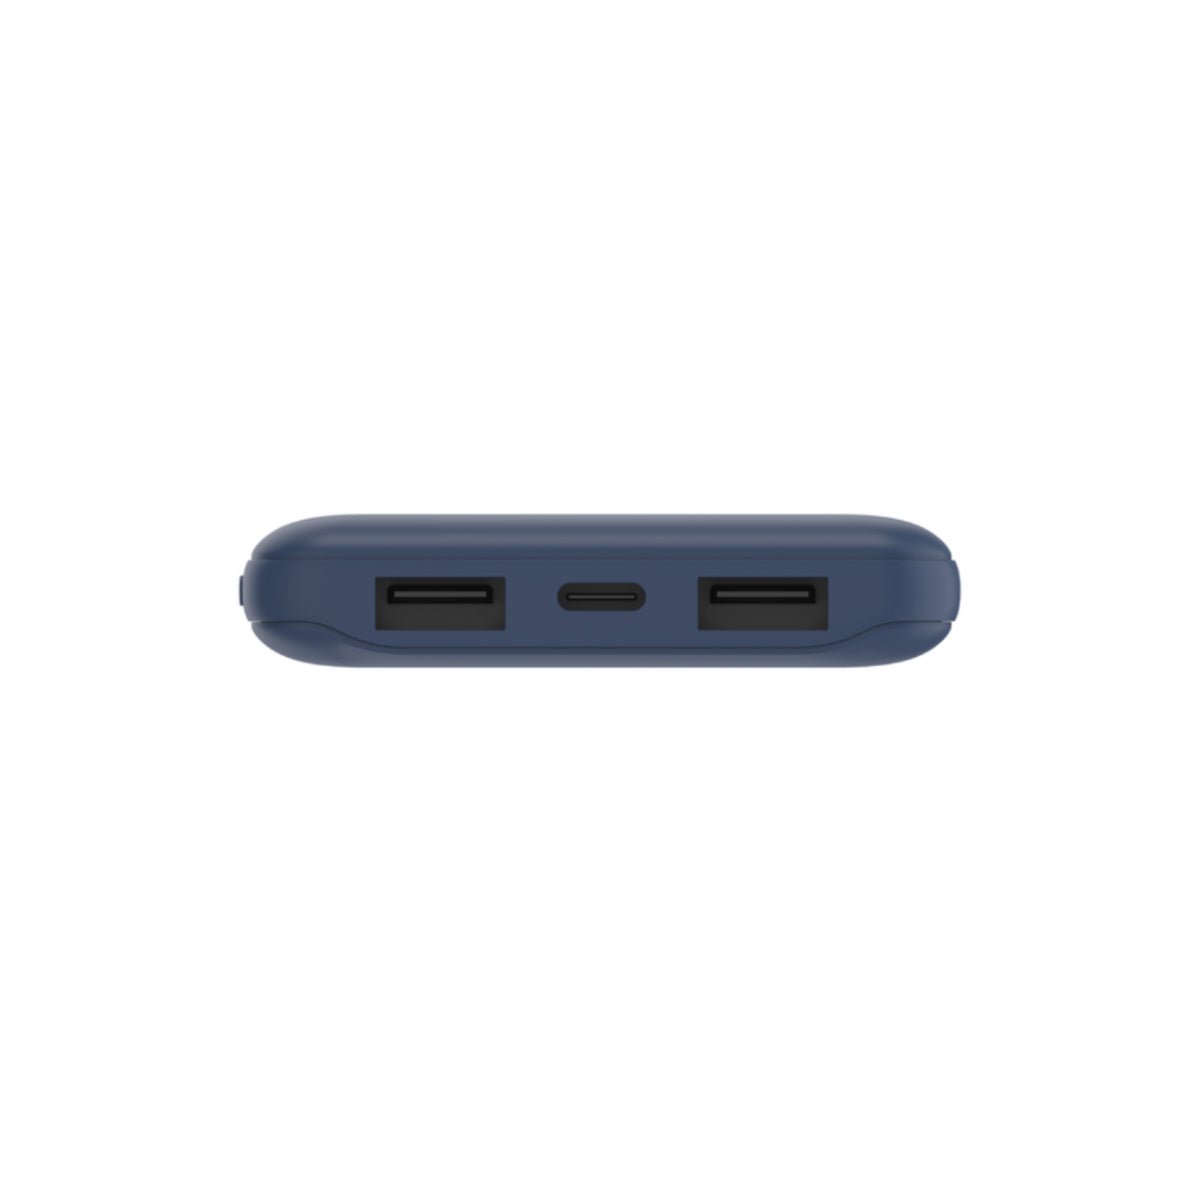 Belkin 10,000 mAh 15W USB-C Power Bank - Blue - مزود طاقة - Store 974 | ستور ٩٧٤